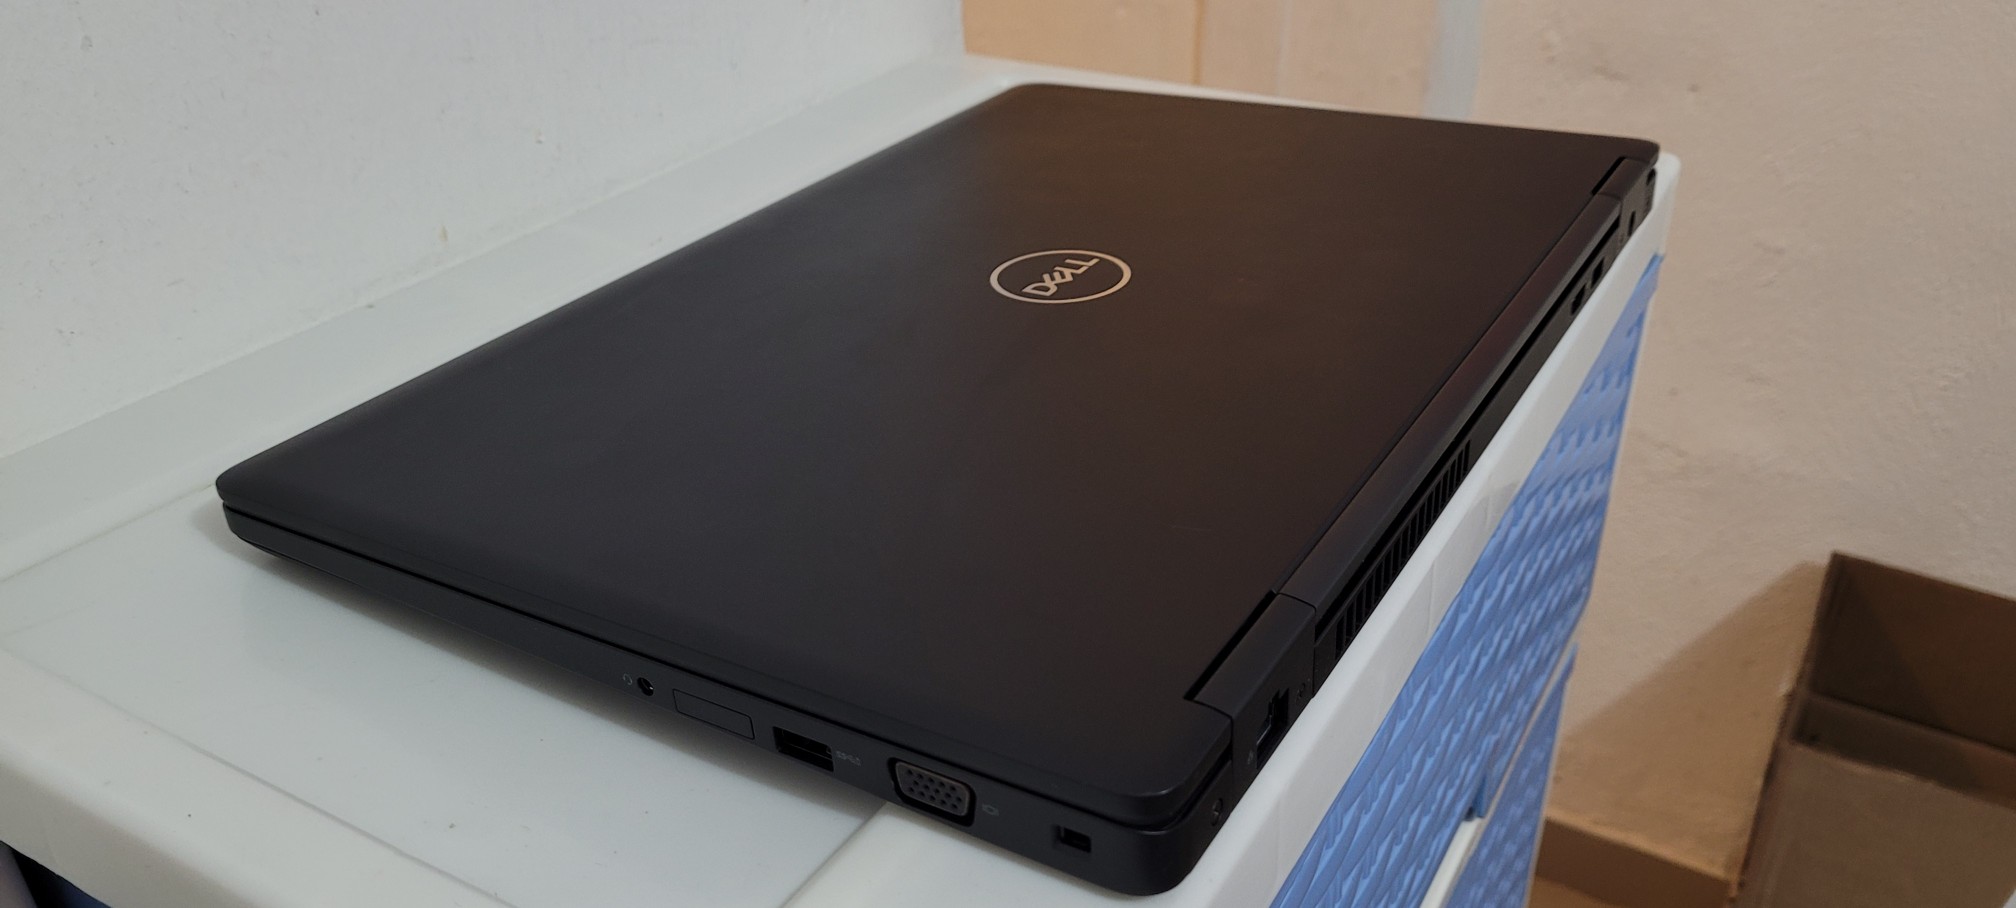 computadoras y laptops - Dell 5580 17 Pulg Core i5 7ma Gen Ram 8gb Disco 128gb SSD Y 1000gb hdmi 2